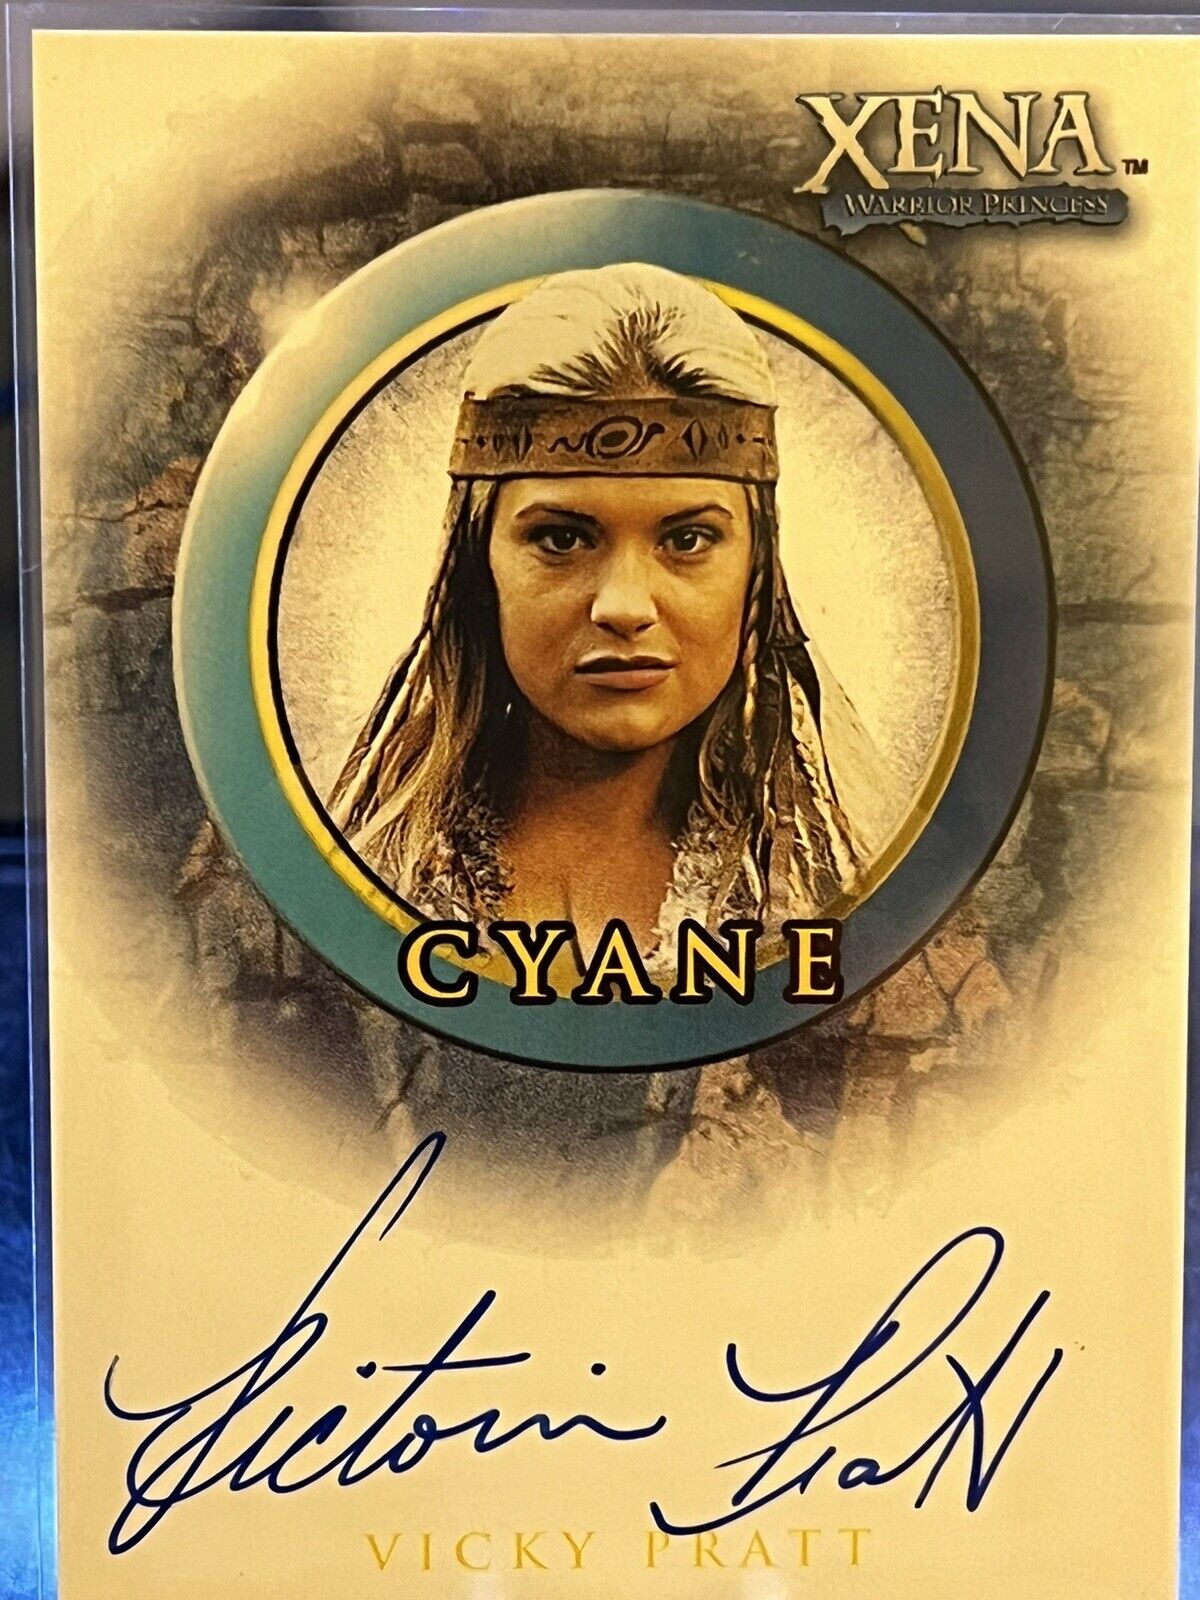 The Quotable Xena Victoria Pratt as Cyane Autograph card